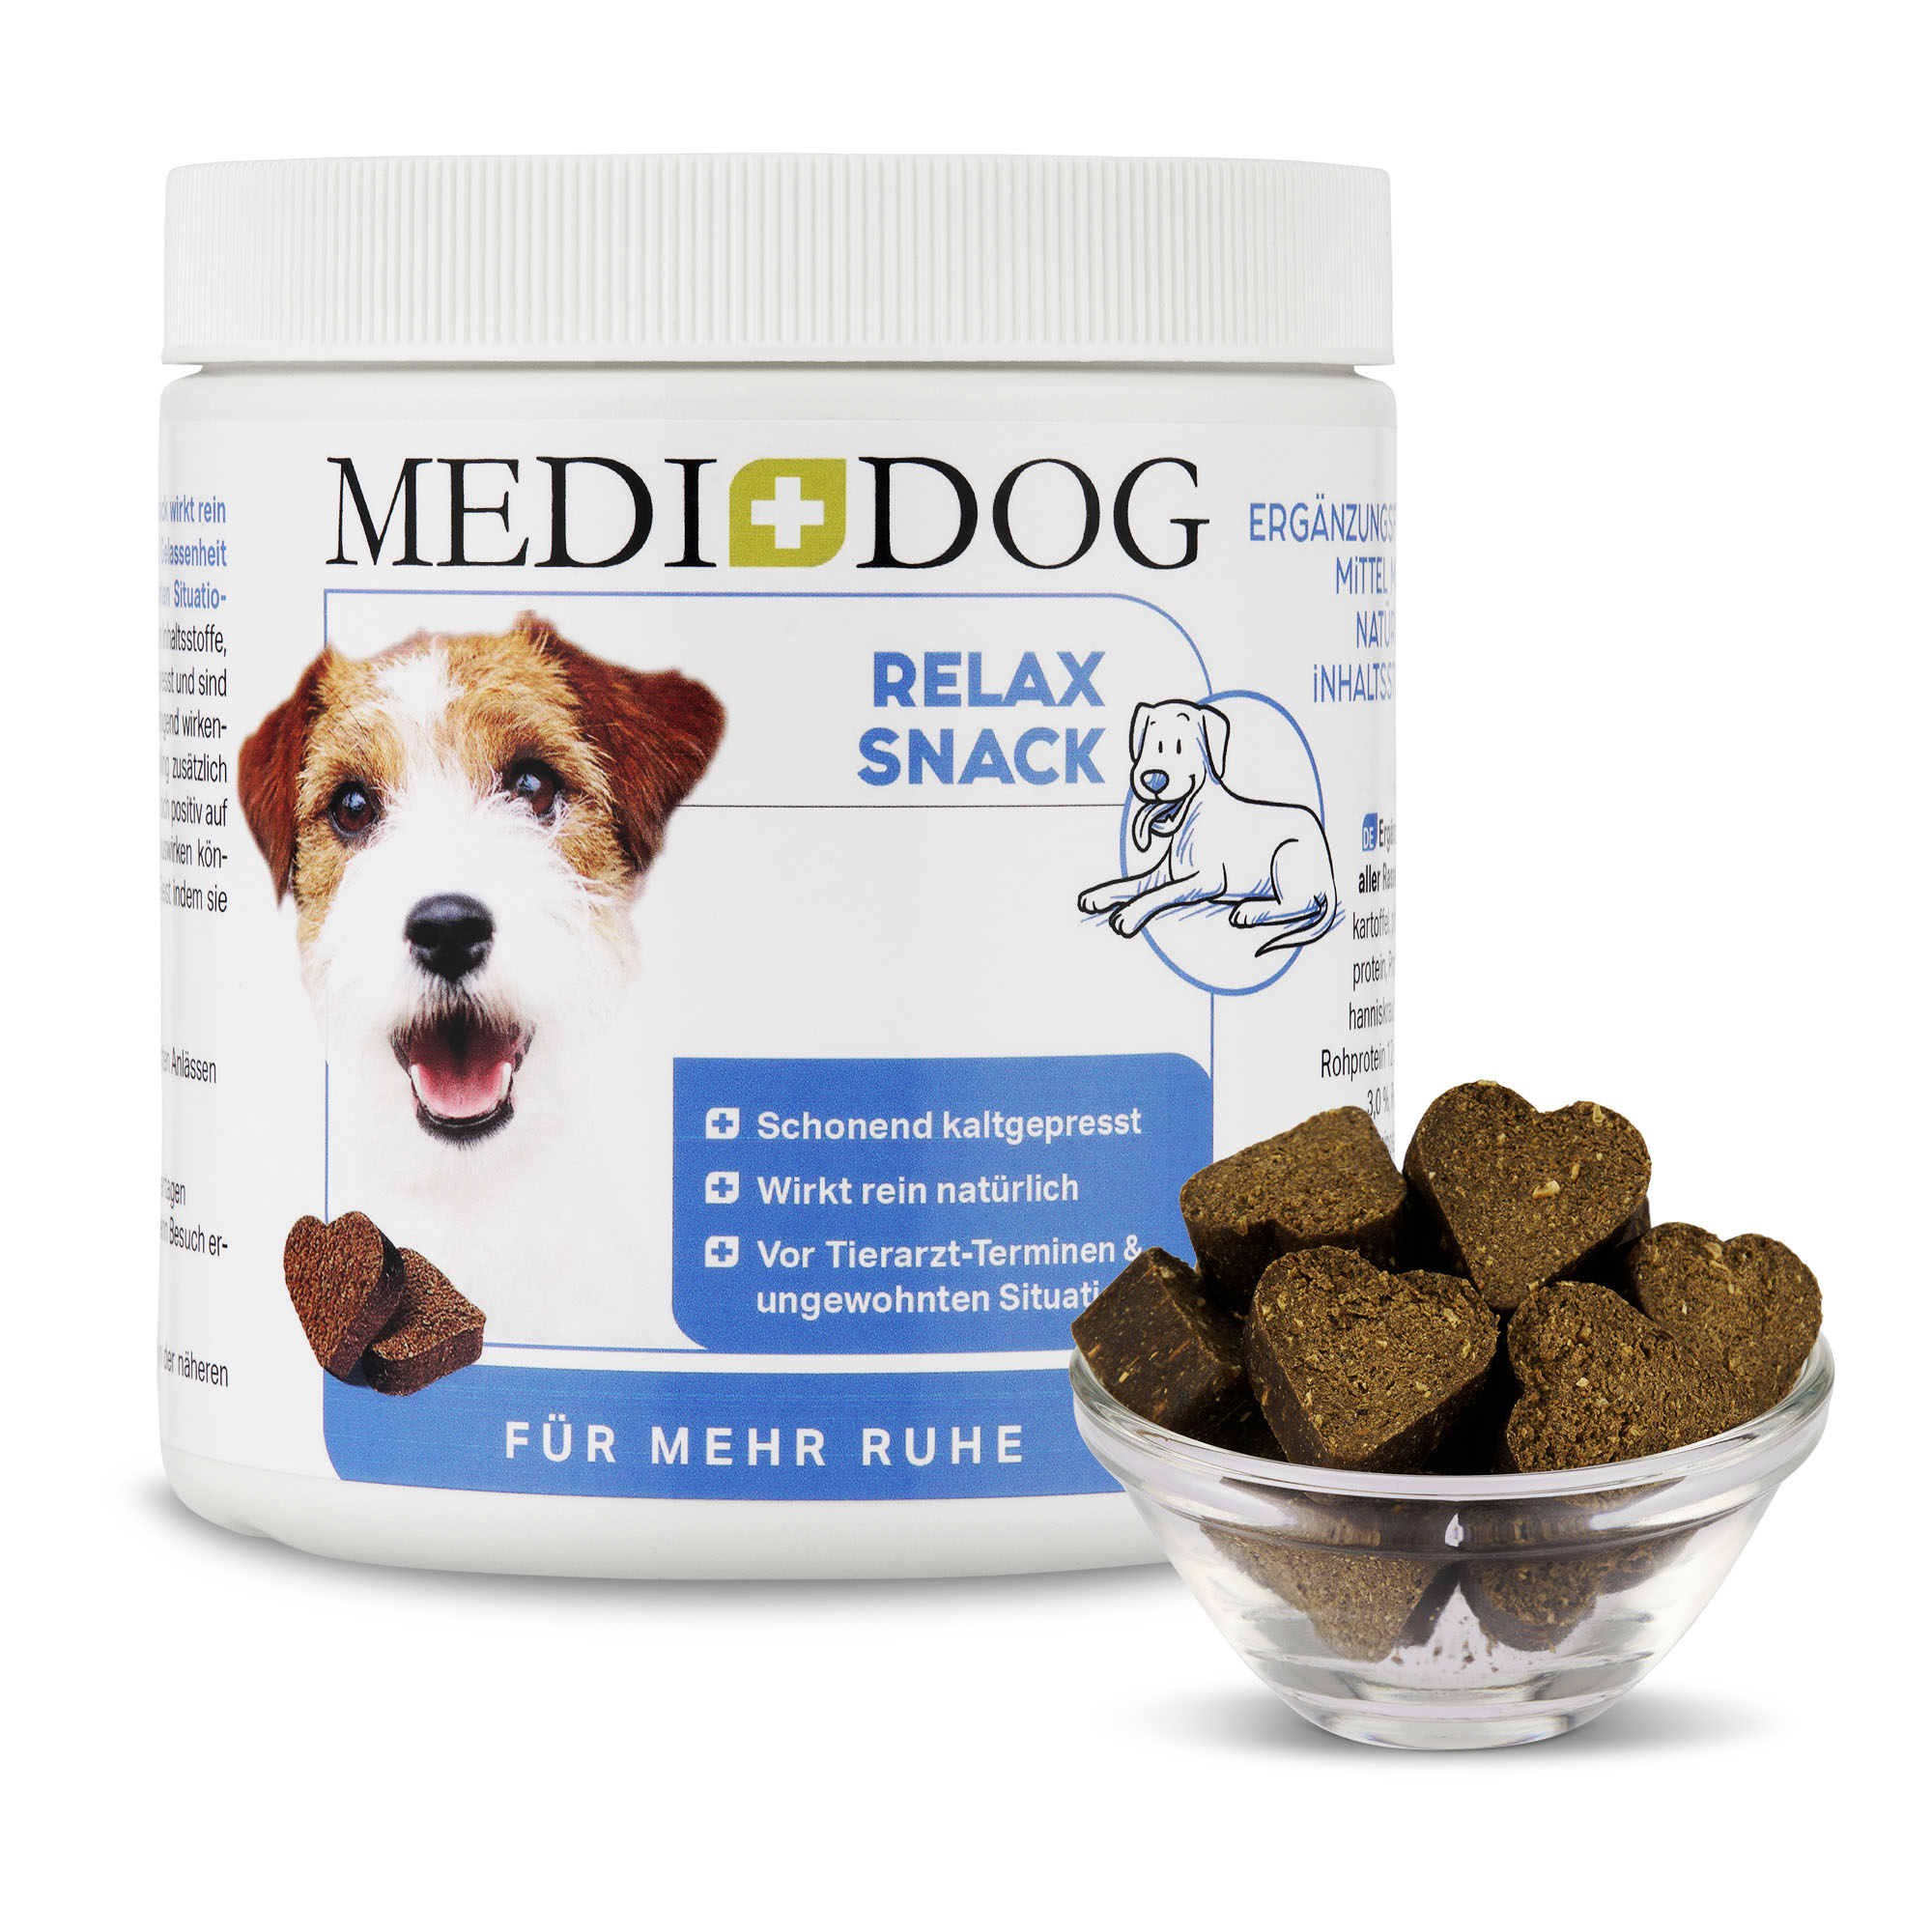 Medidog Relax Snack